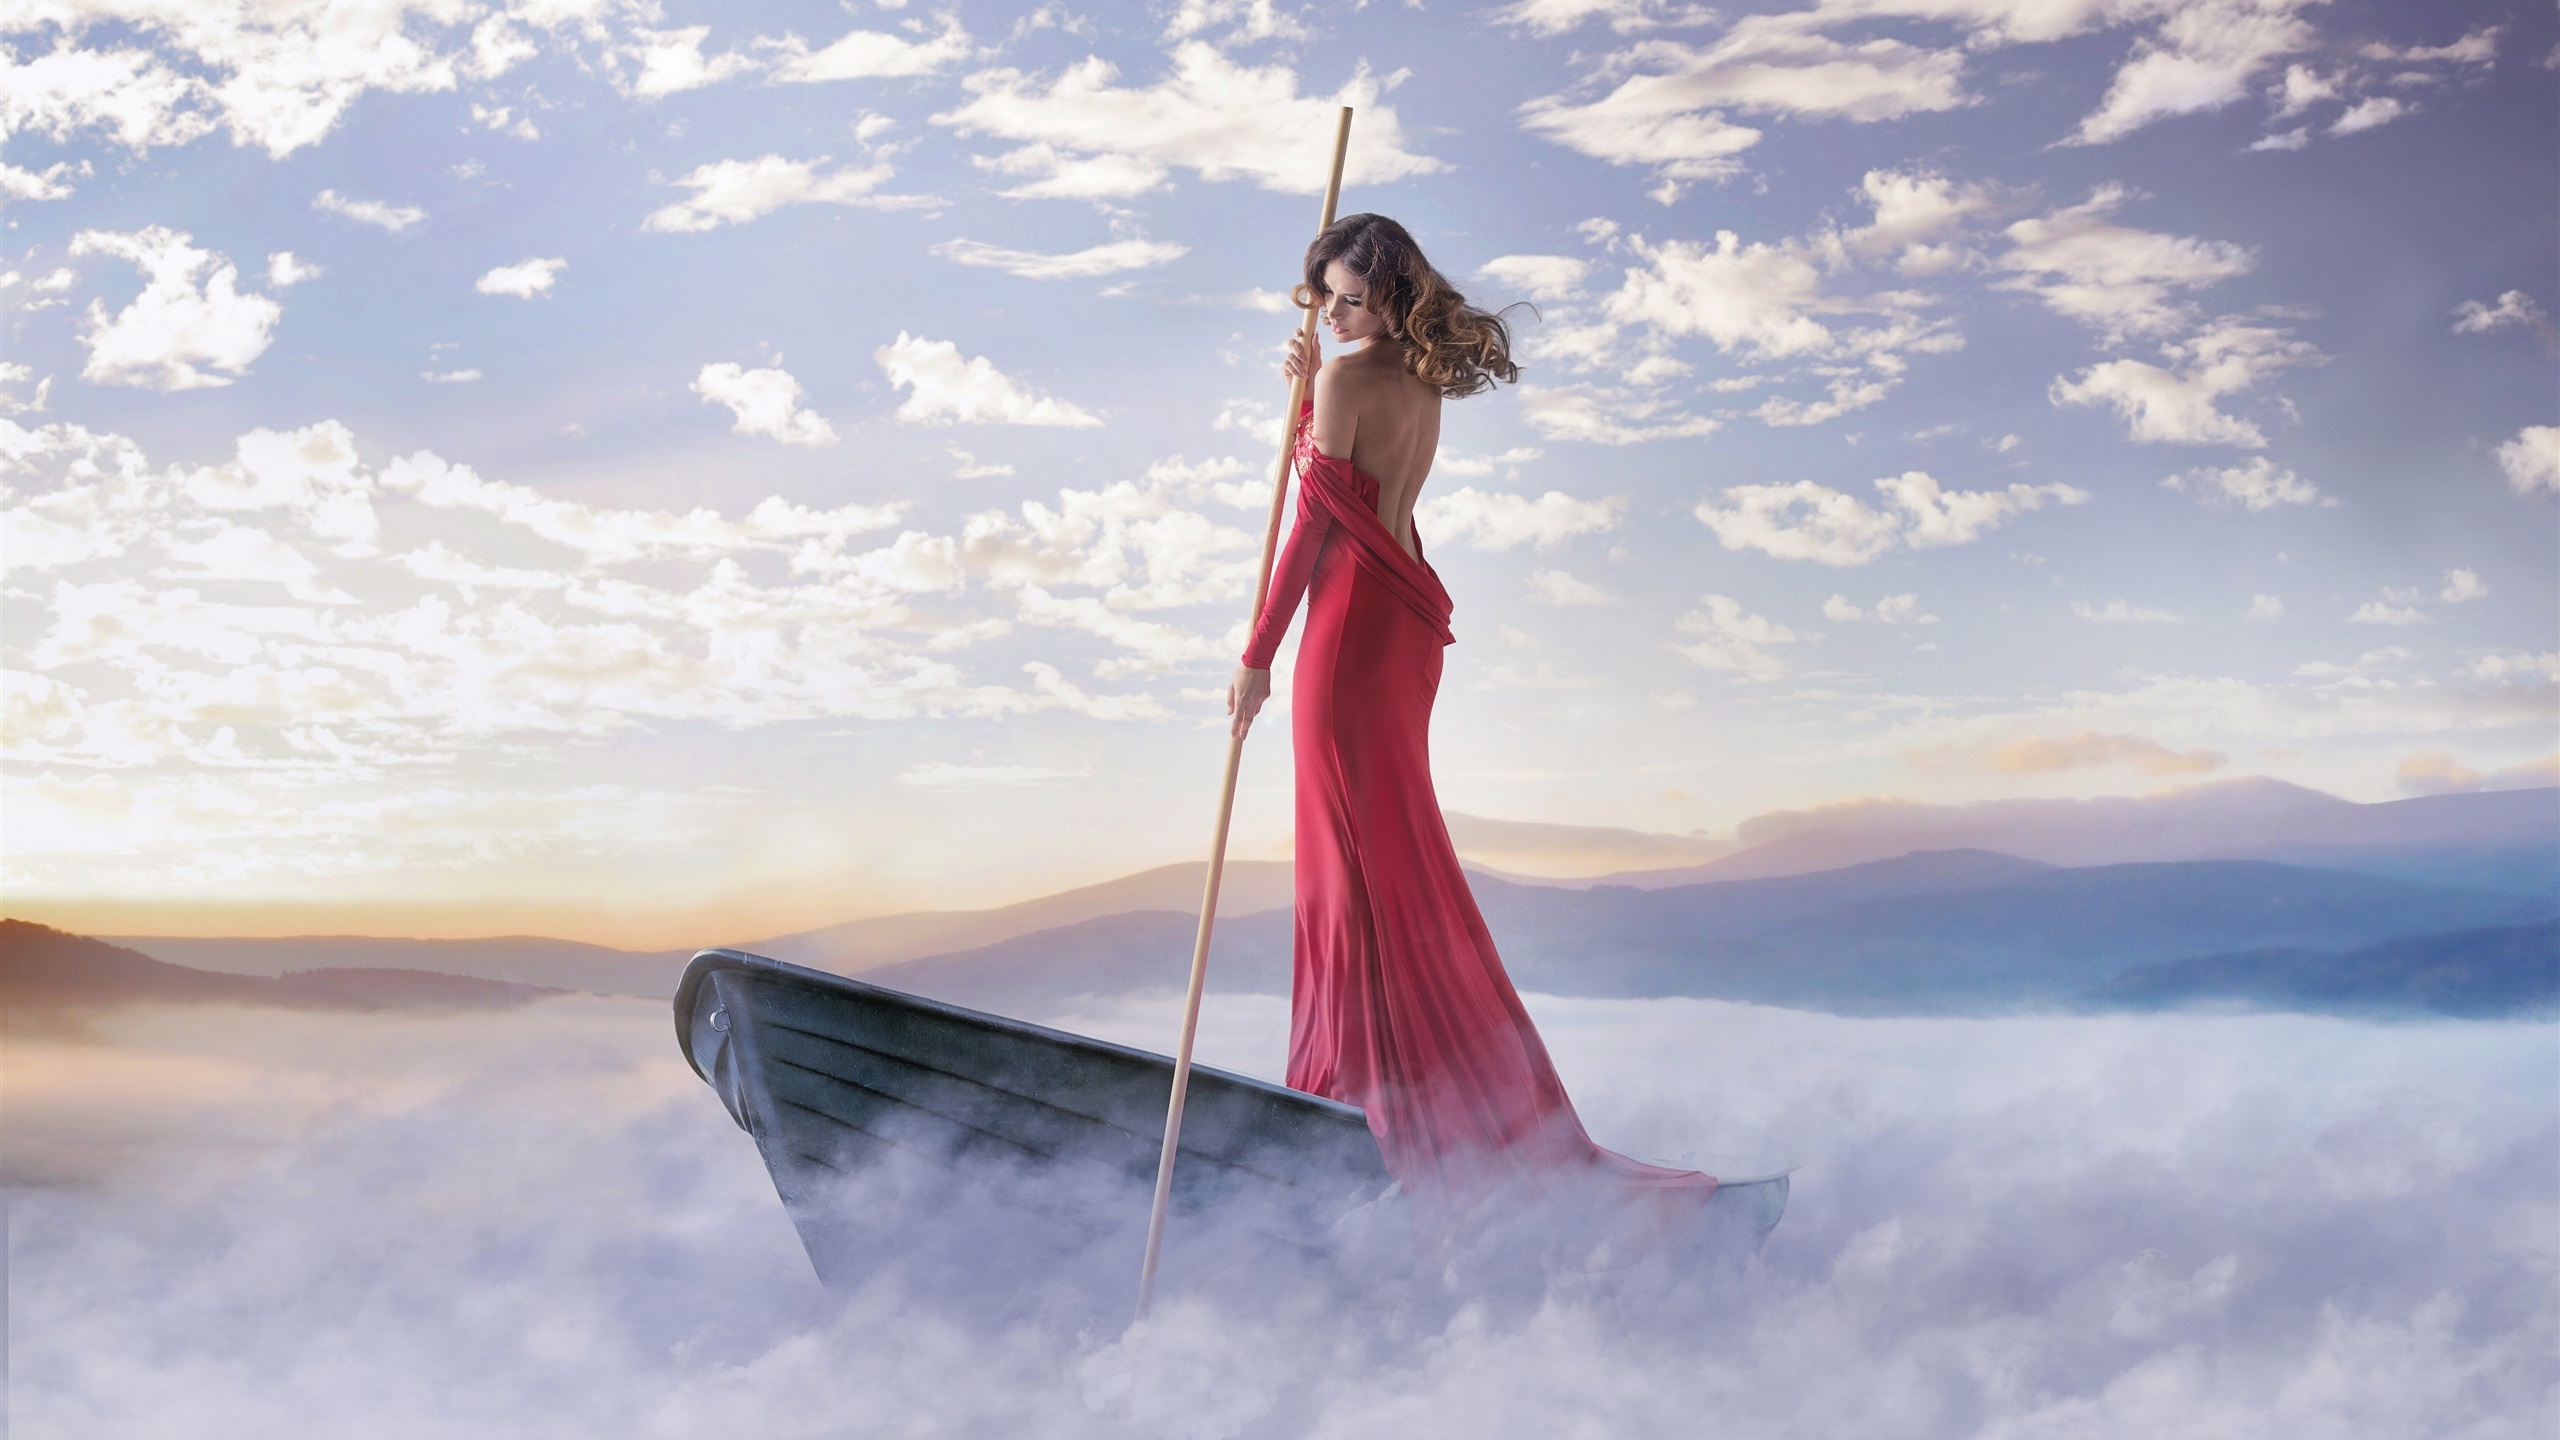 Red-dress-girl-boat-fog-clouds-coast_2560x1440.jpg